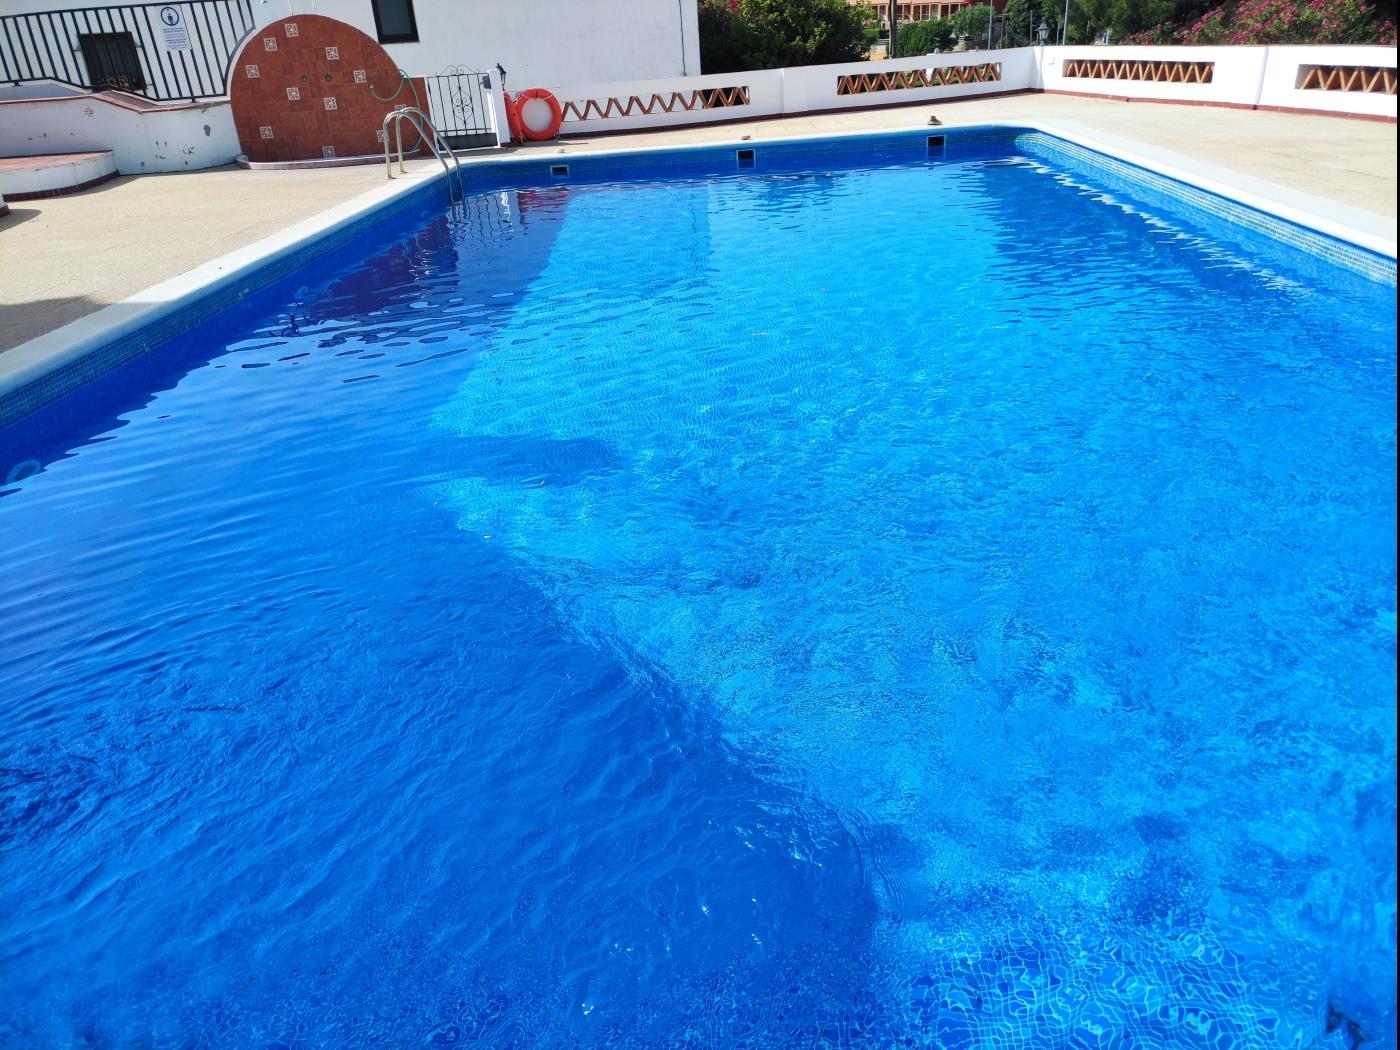 Apartament Josep in La Borna with communal pool in Begur